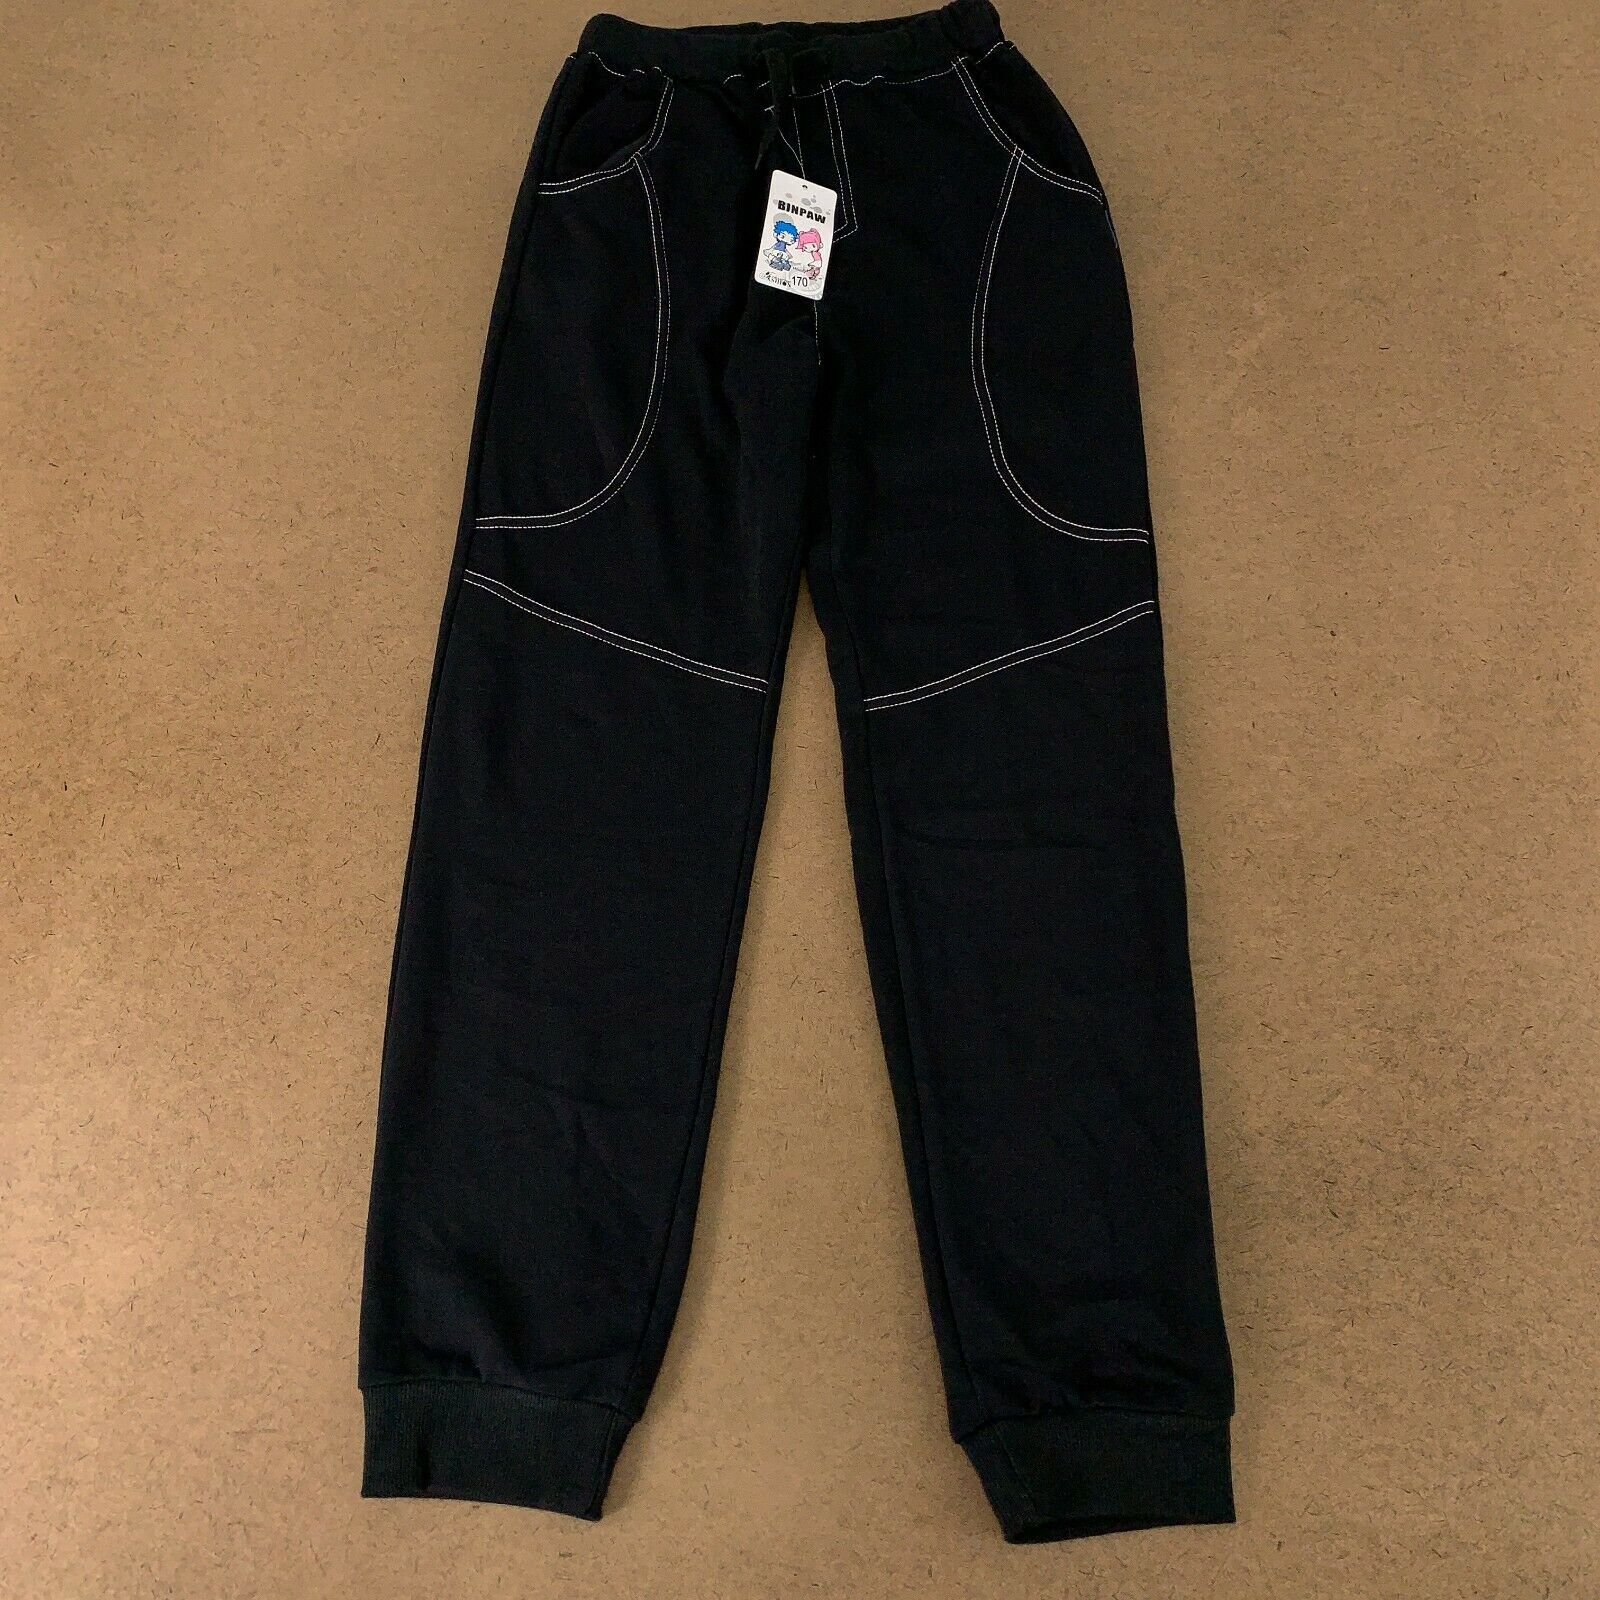 Binpaw Boys Size Medium (10-12) Black Cotton Blend Lightweight Joggers Nwt